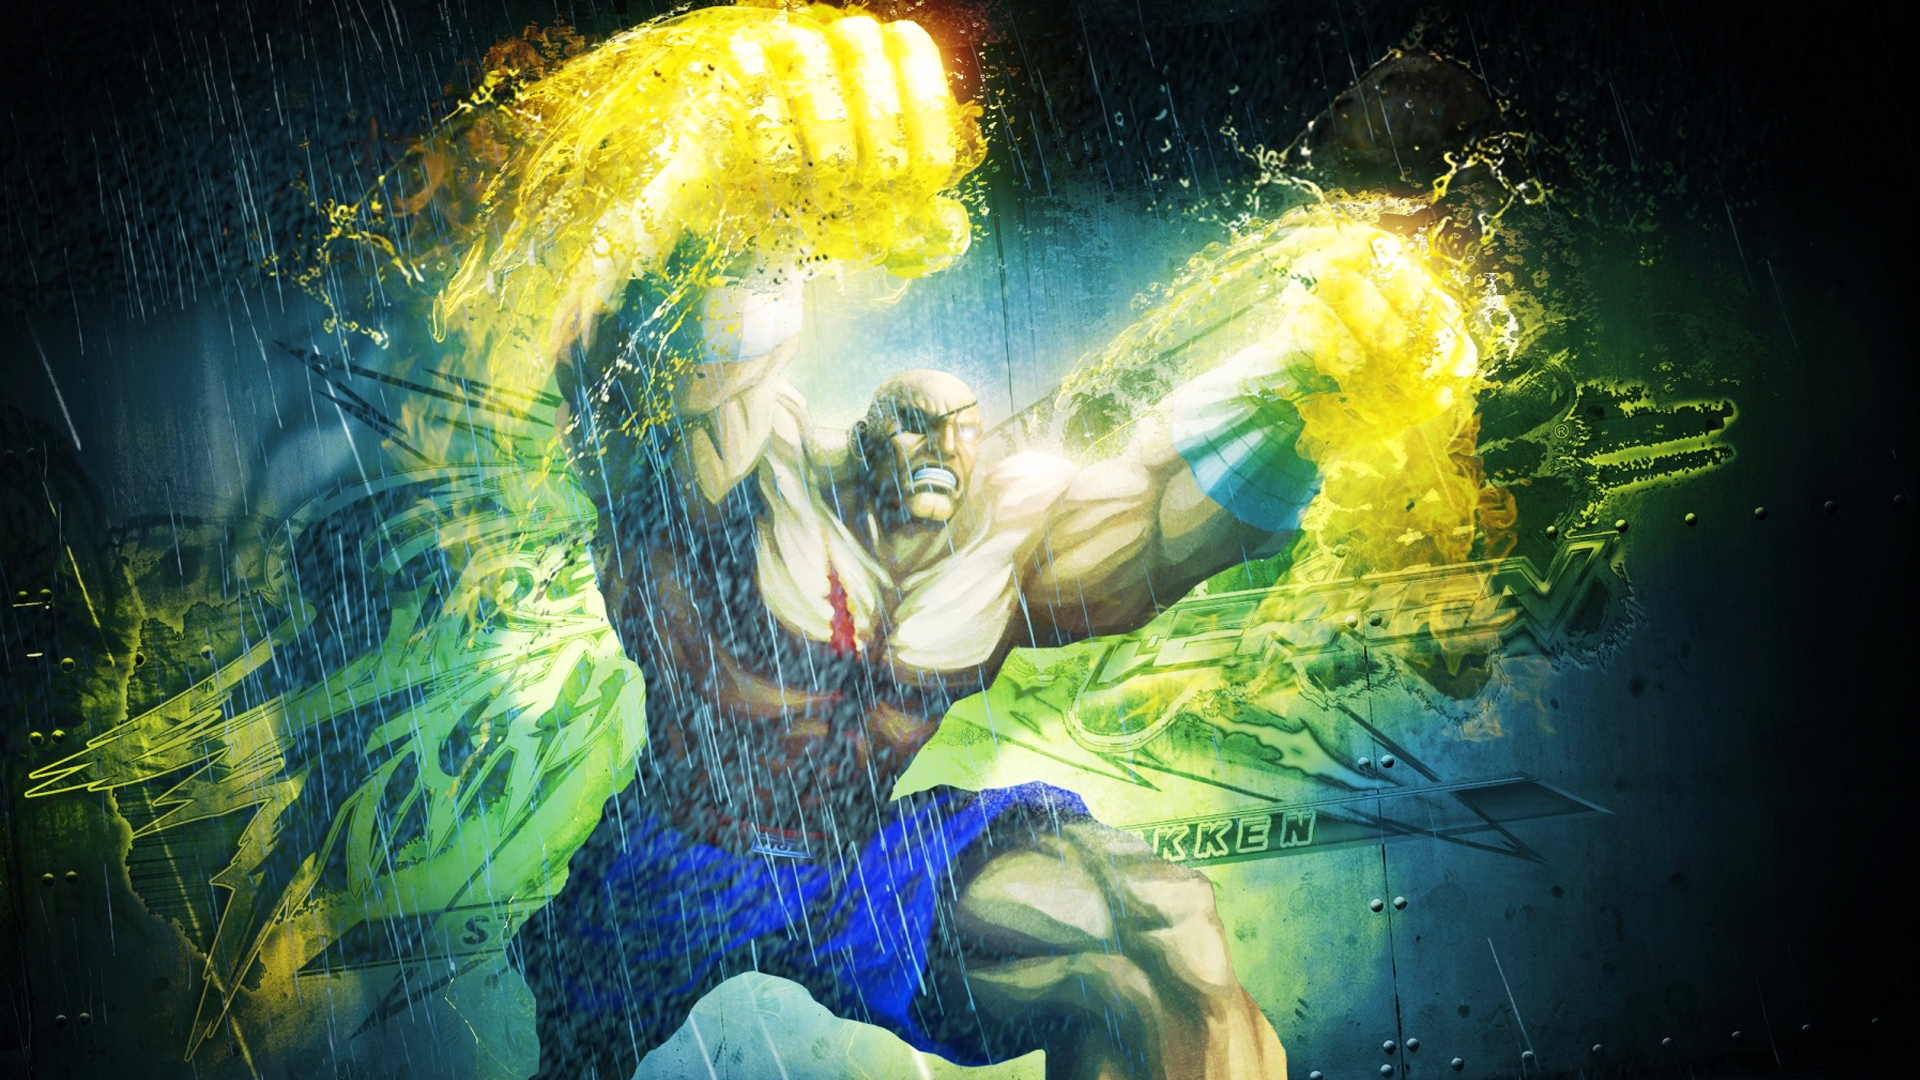 Wallpaper Street Fighter X Tekken Sur Ps4 Xbox One Wiiu Ps3 Ps